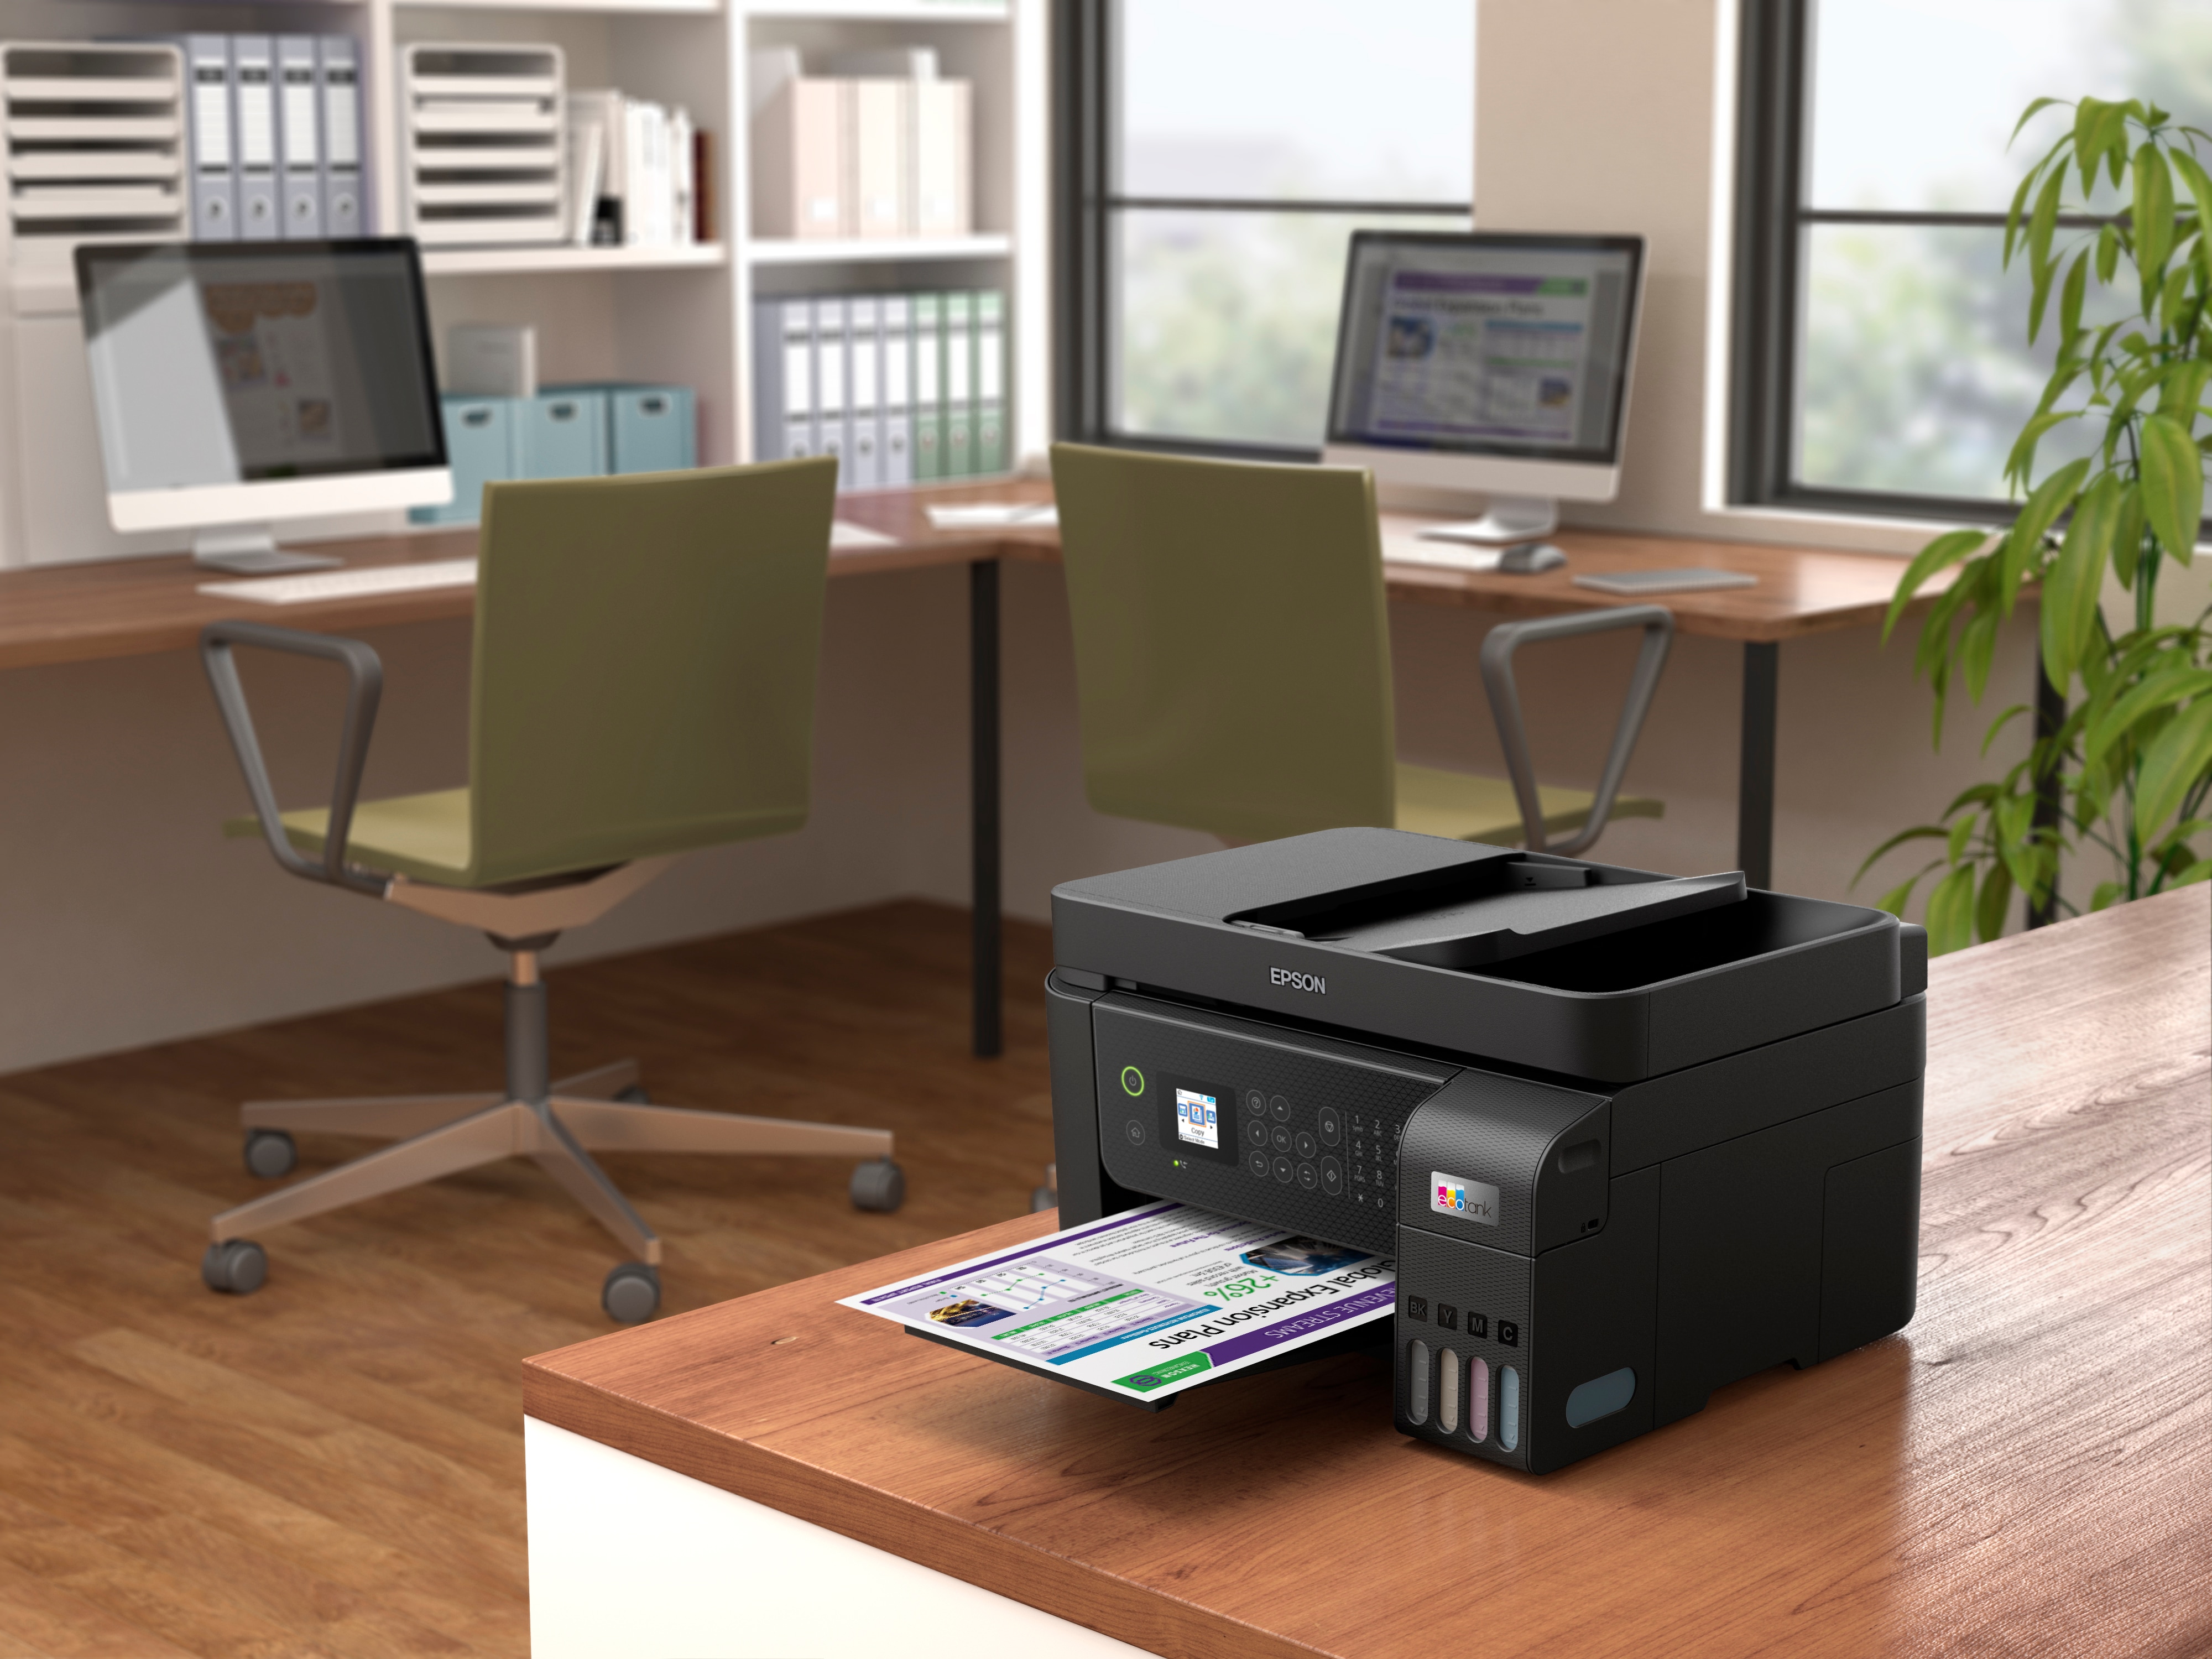 EPSON EcoTank ET-4800 Multifunktionsdrucker Scanner Kopierer Fax LAN WLAN  ++ Cyberport